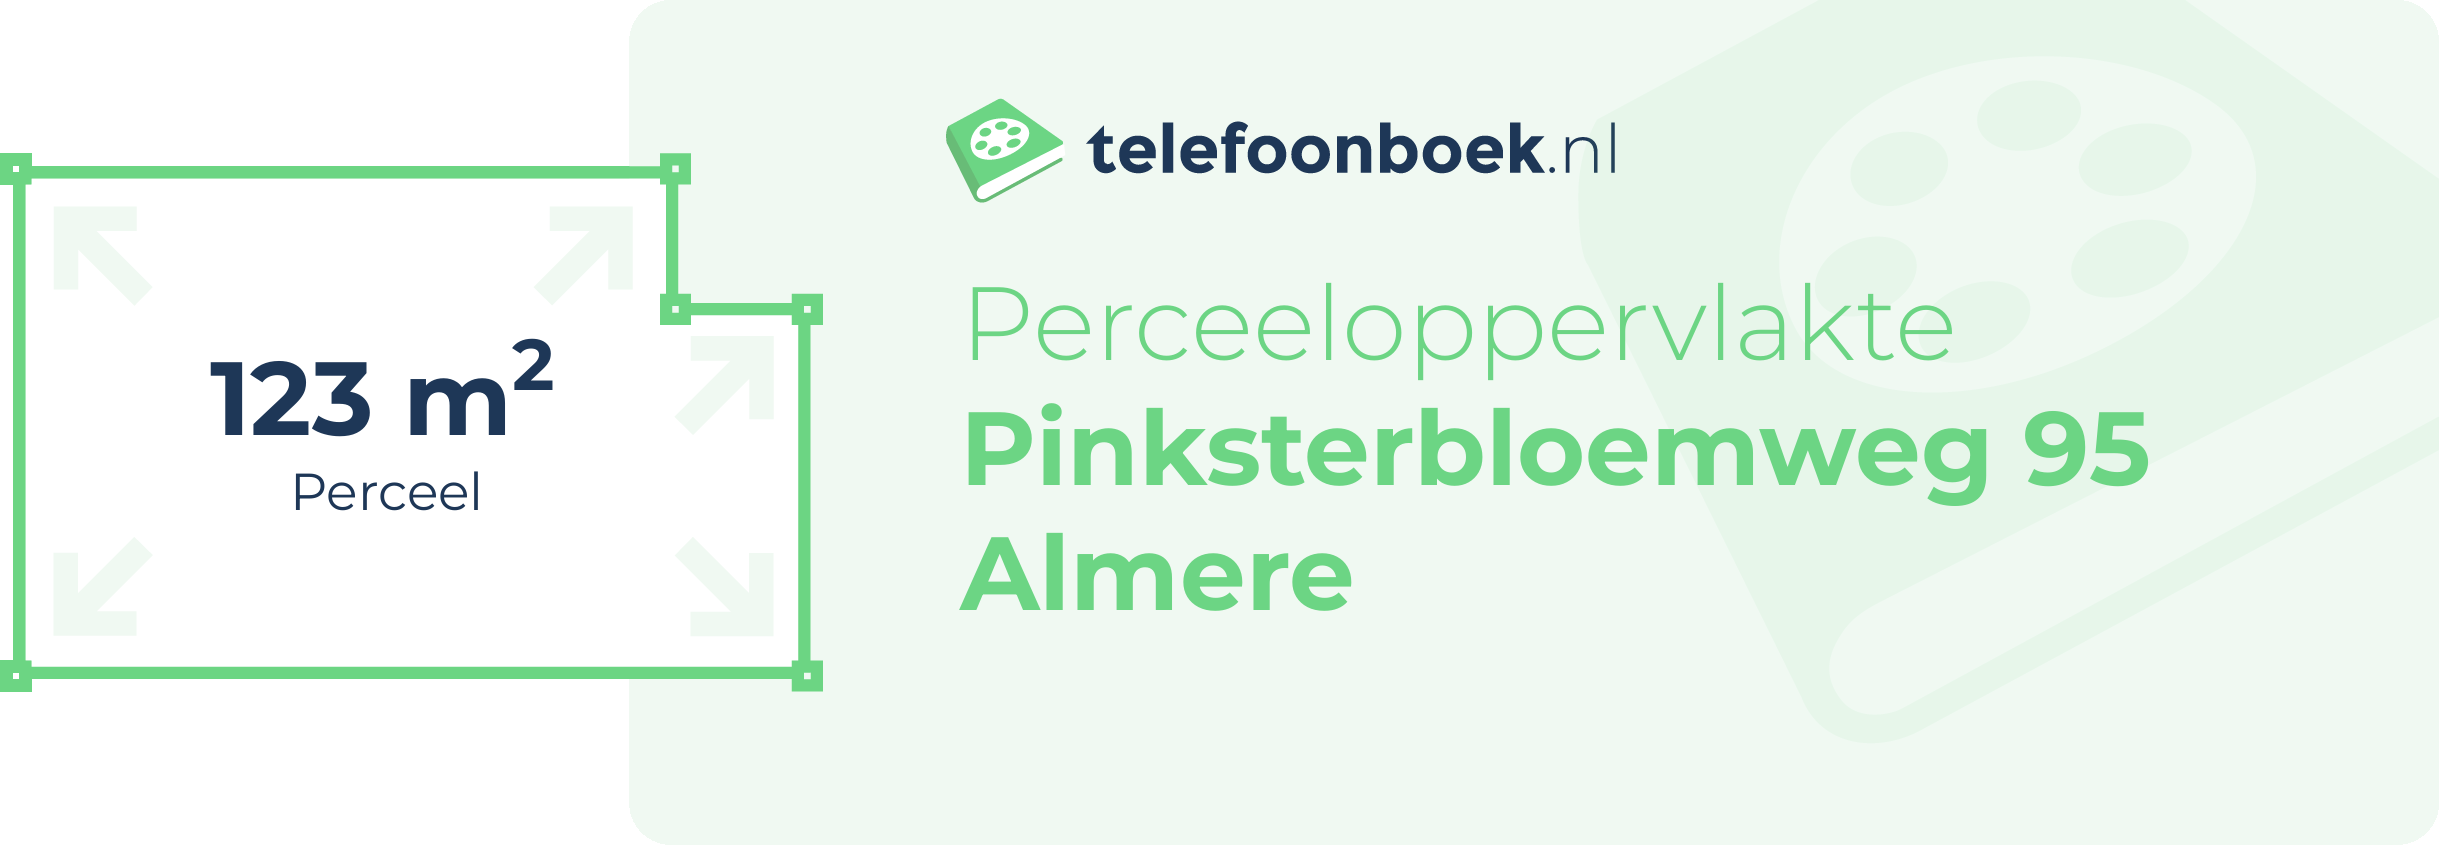 Perceeloppervlakte Pinksterbloemweg 95 Almere